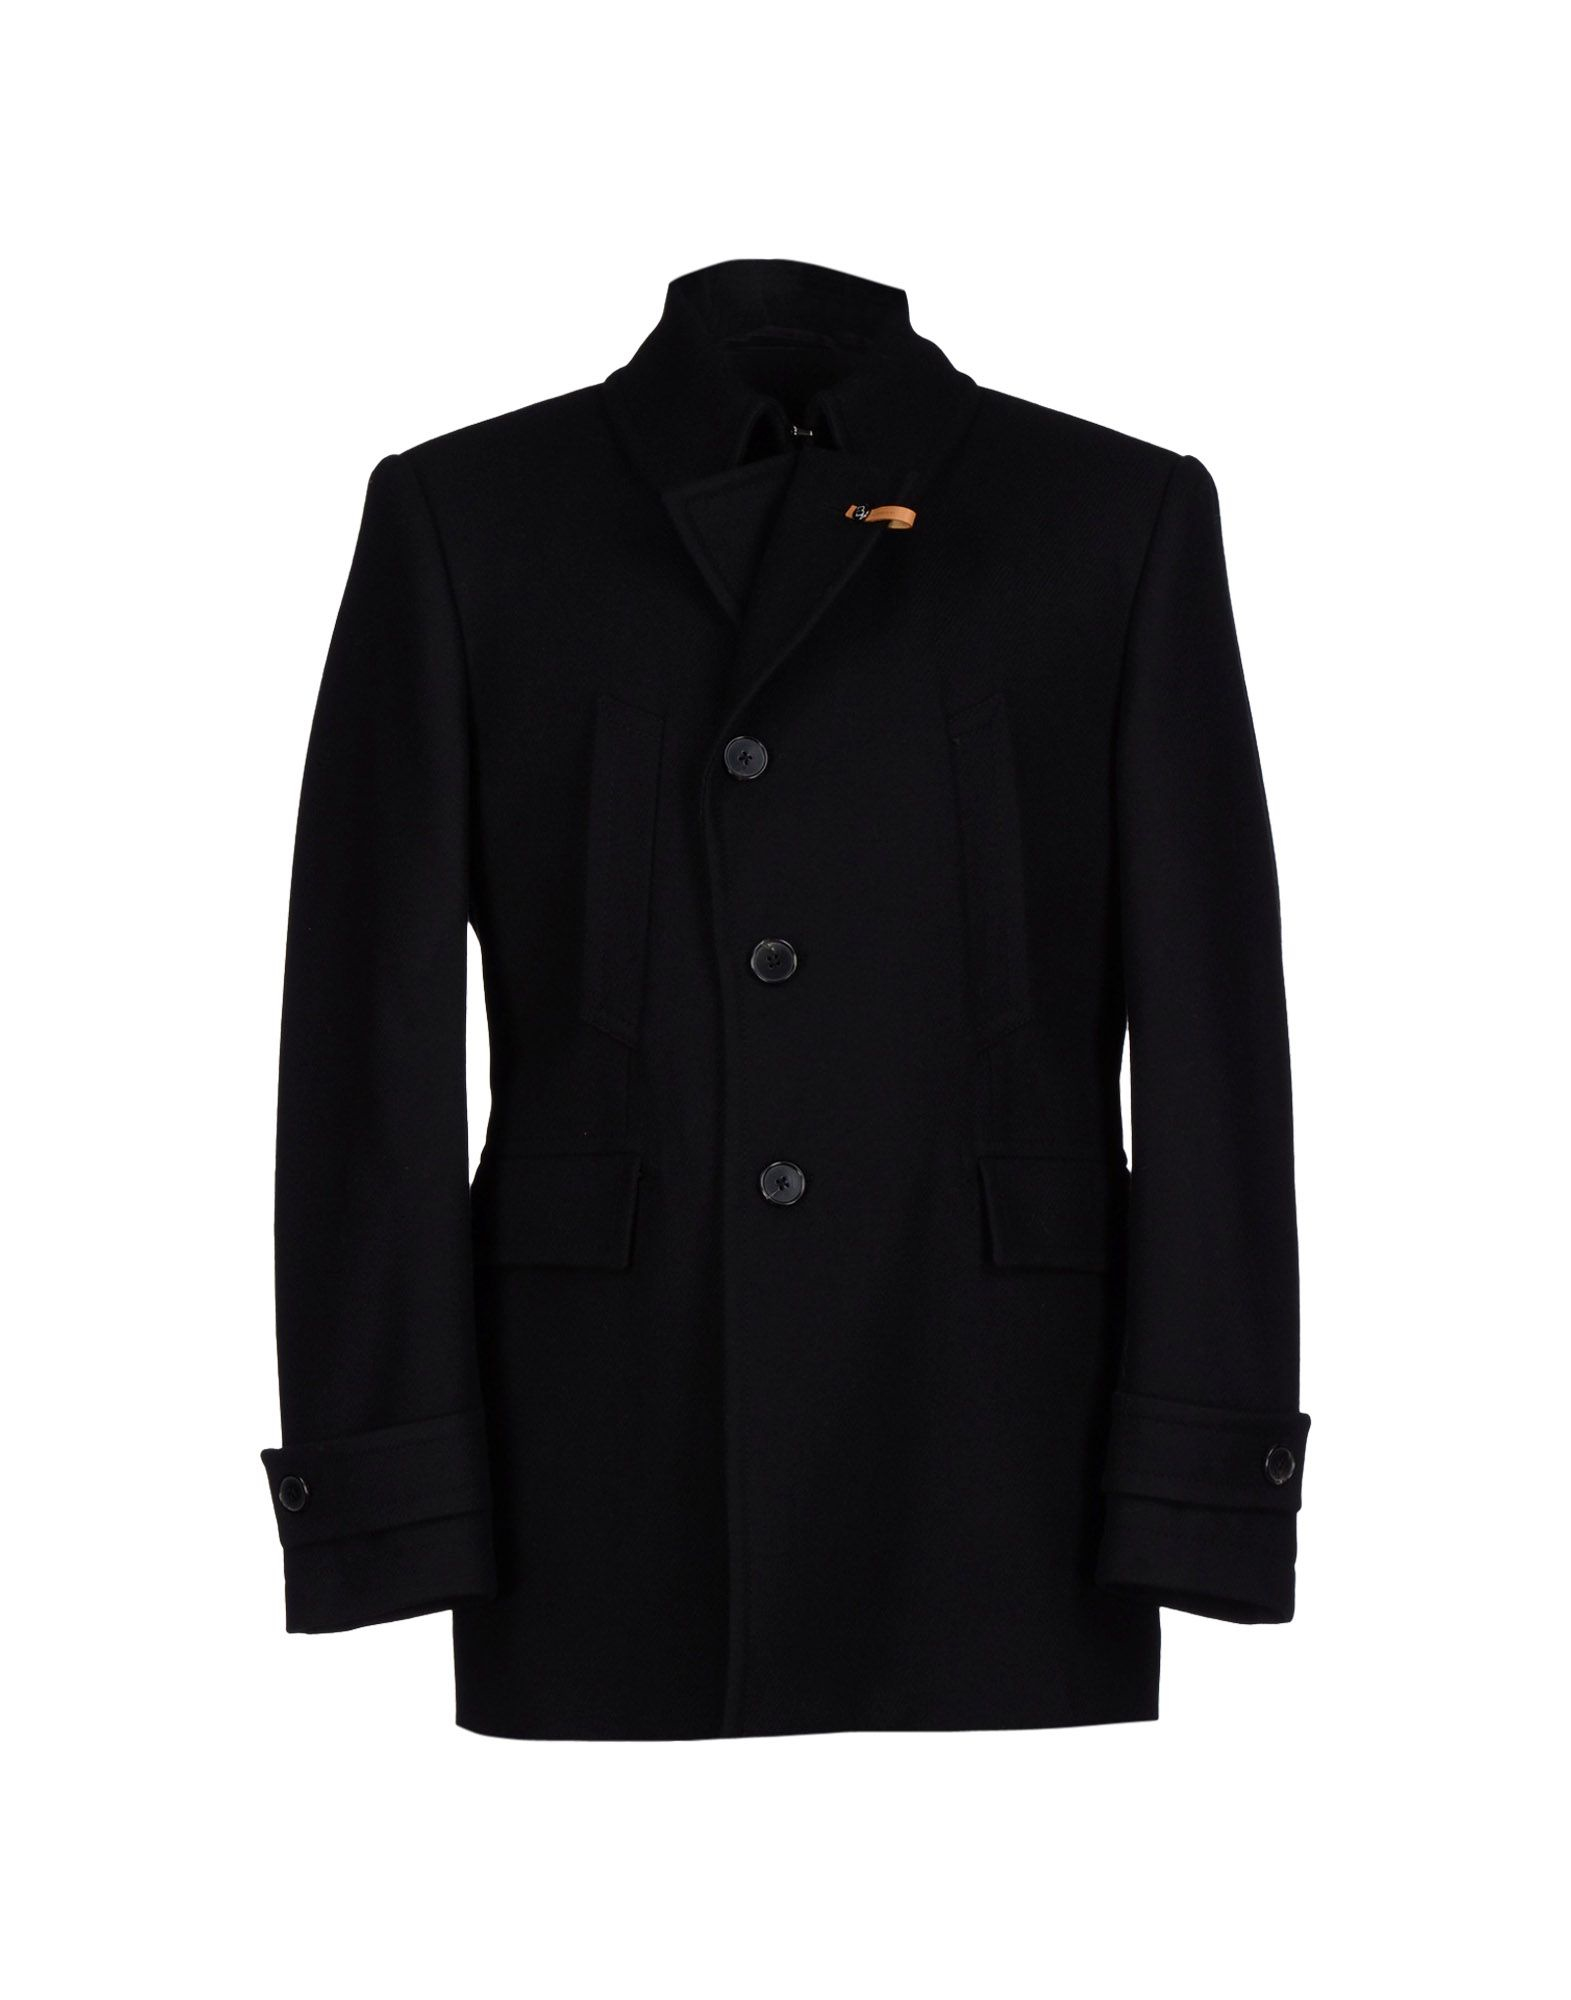 Baldessarini Coat in Black for Men - Lyst